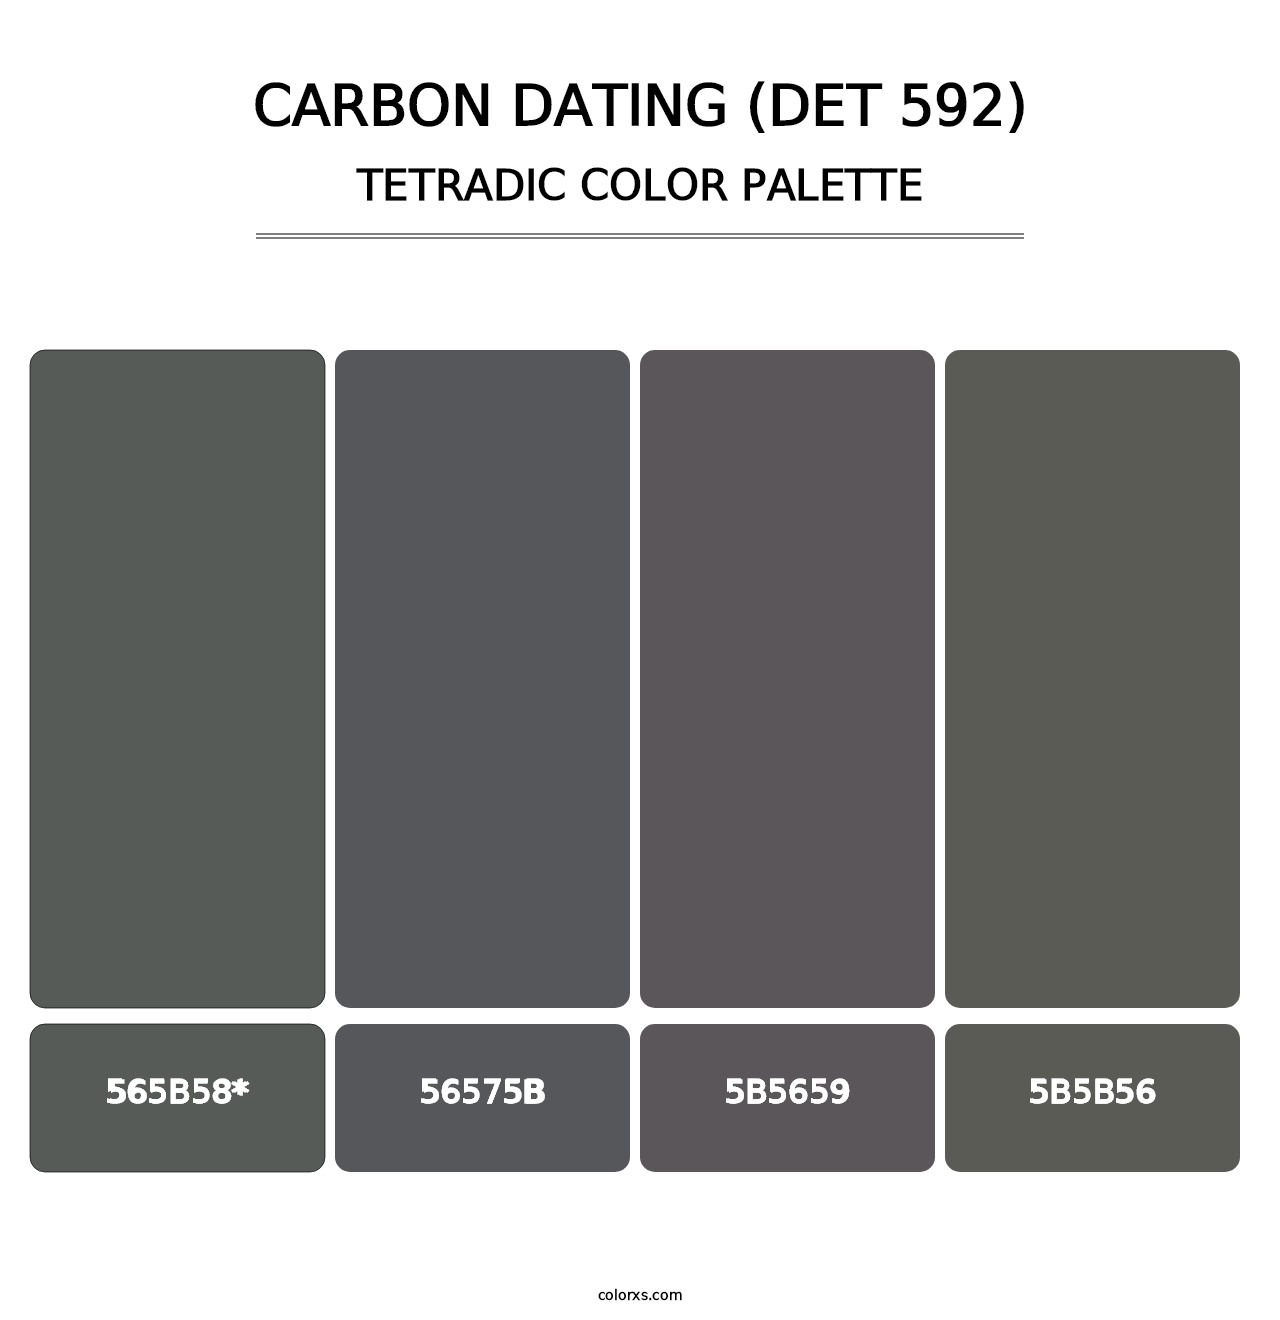 Carbon Dating (DET 592) - Tetradic Color Palette